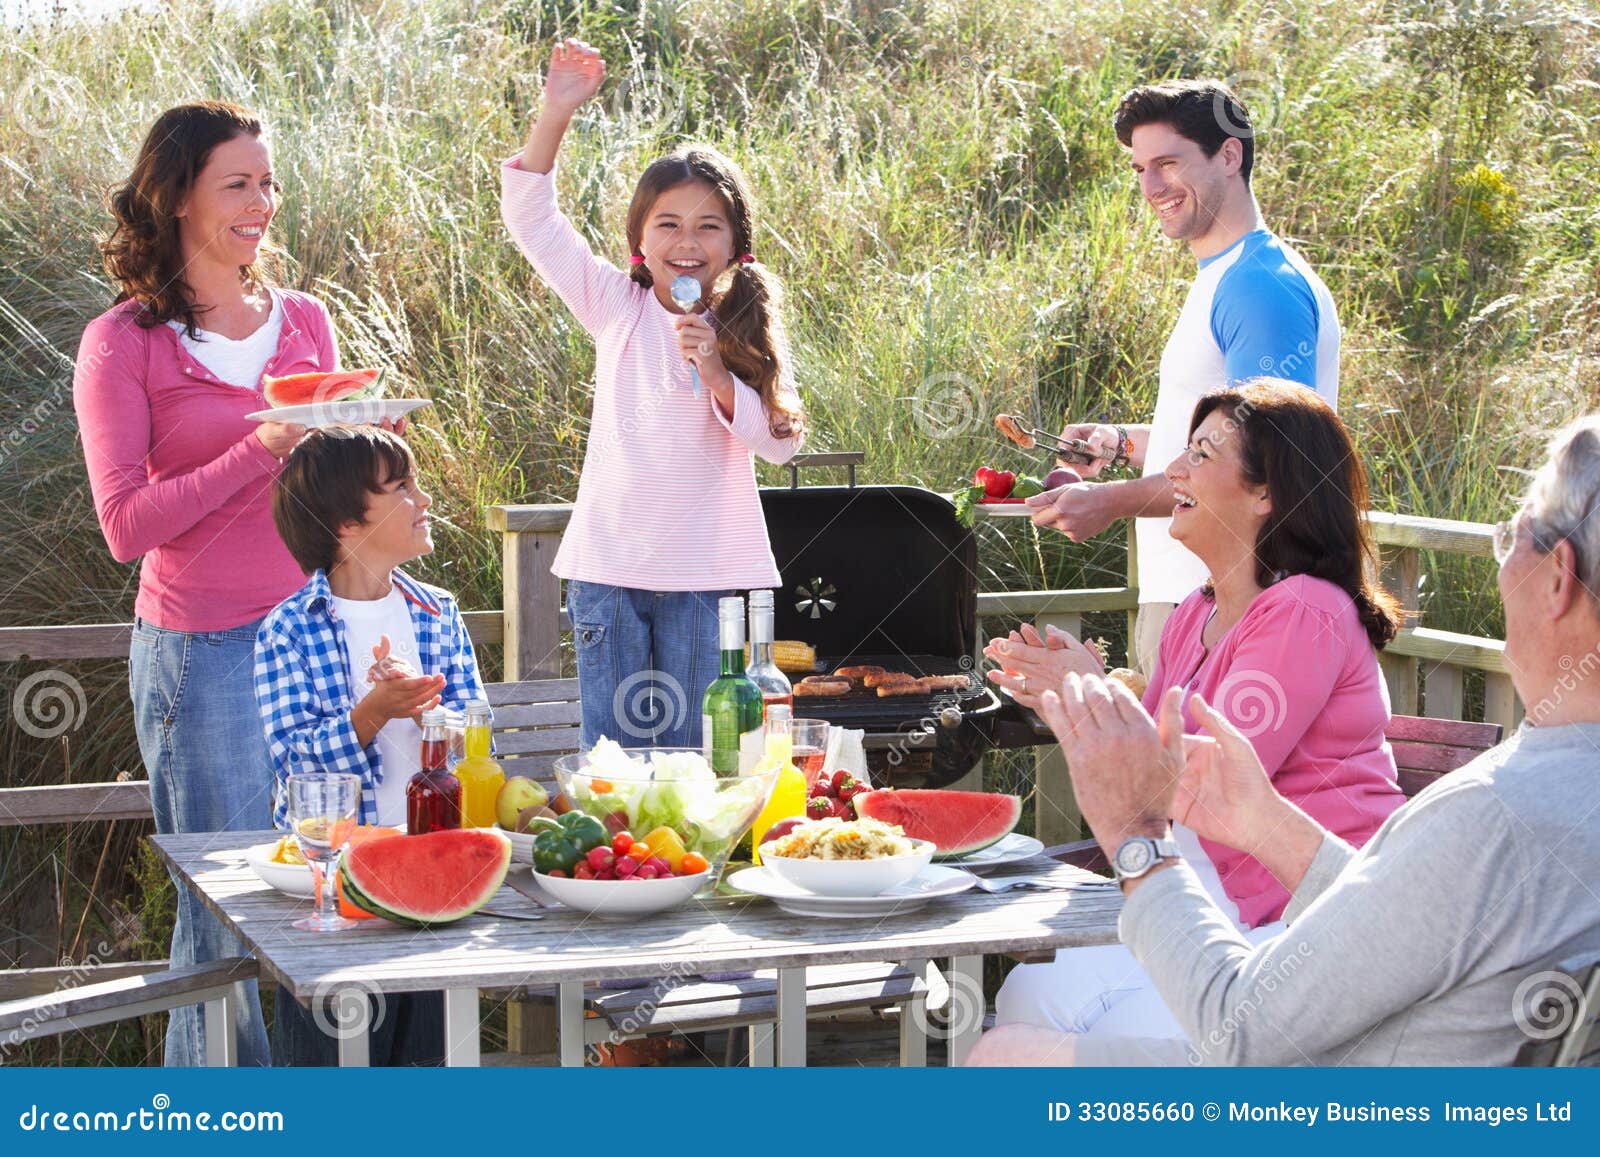 multi generation family having outdoor barbeque enjoying fun 33085660